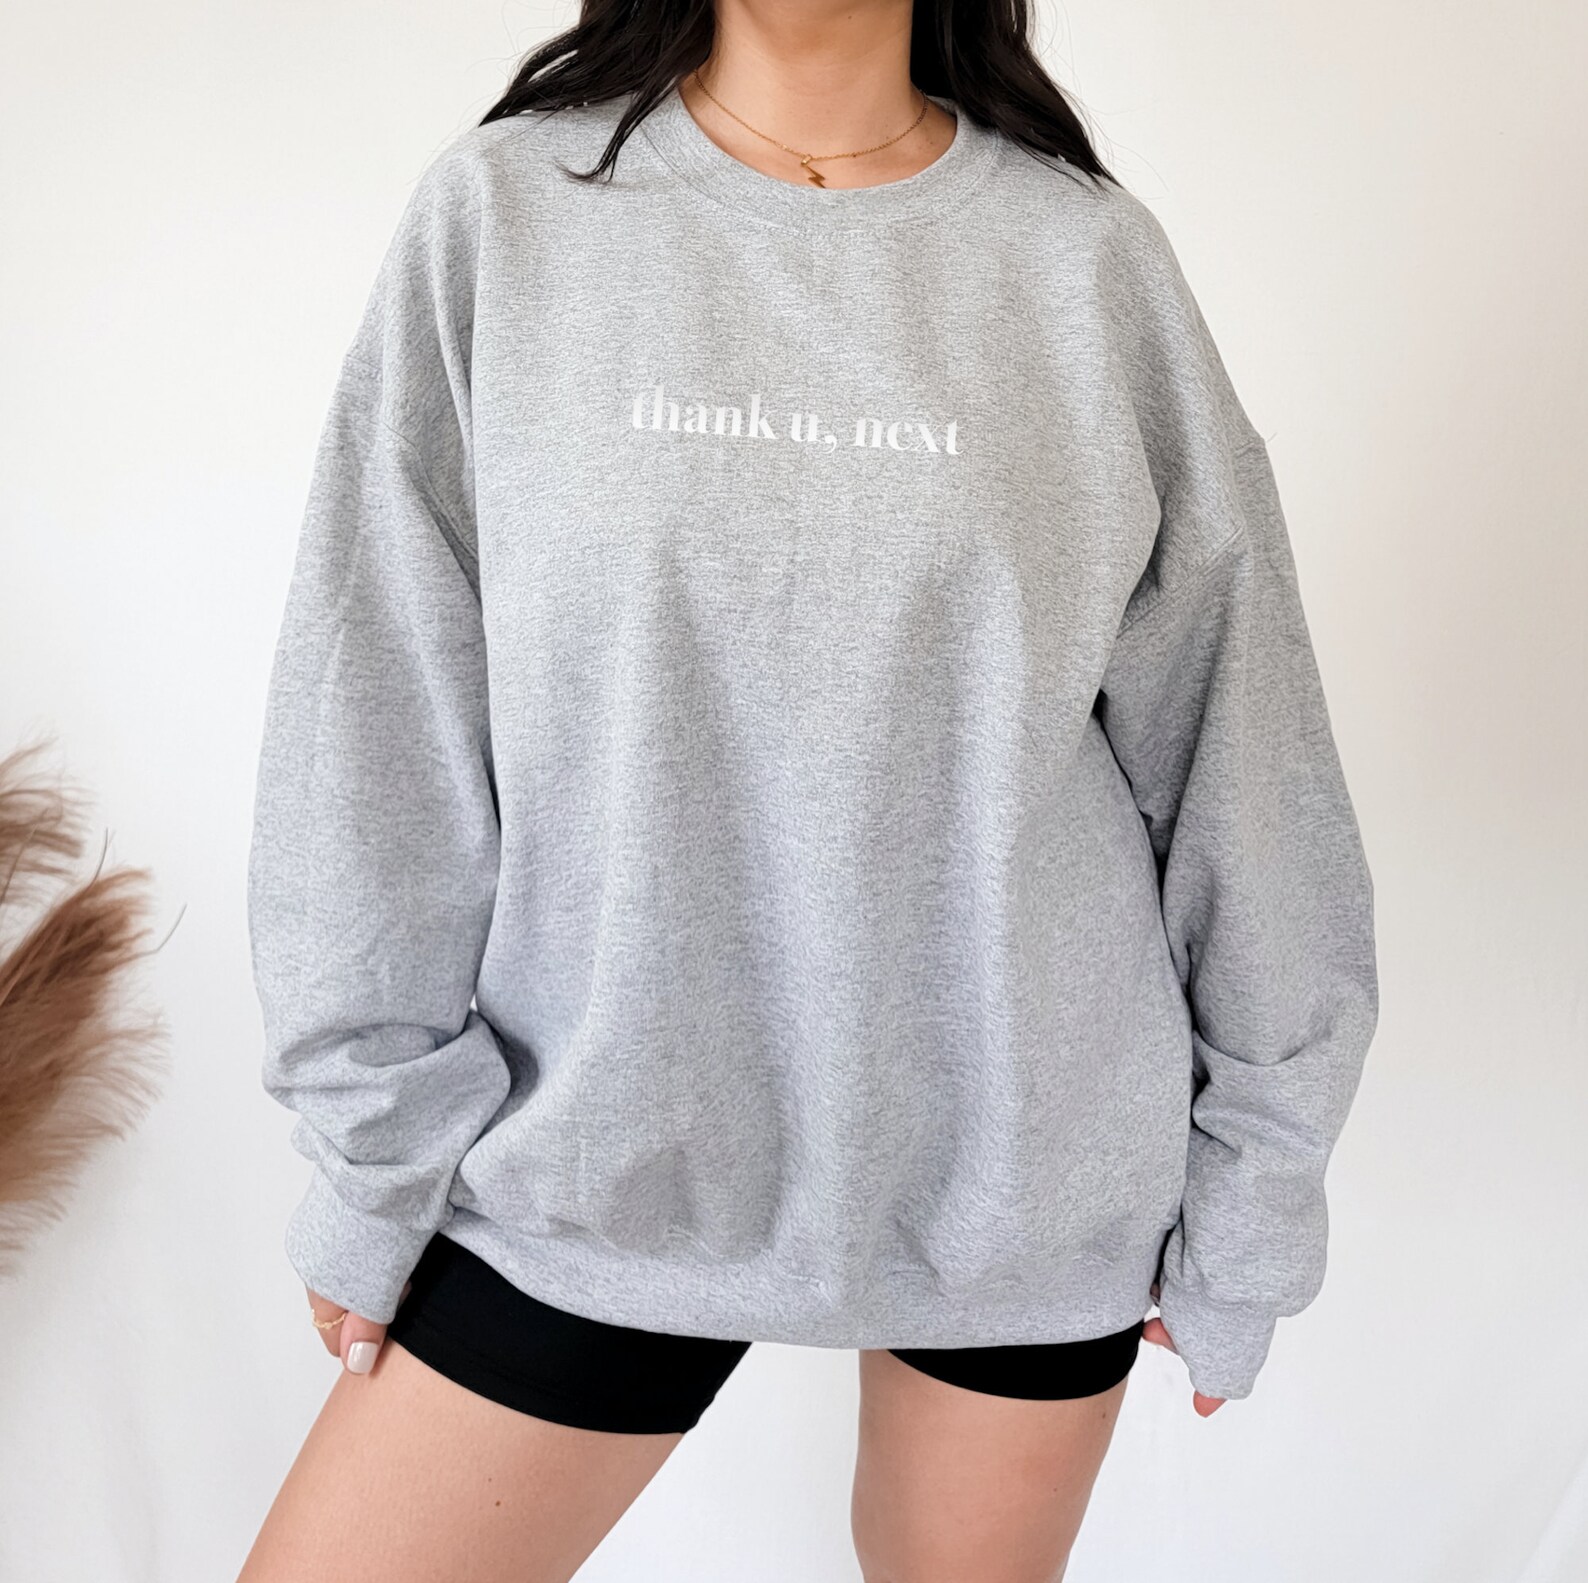 Thank U Next Sweatshirt Ariana Grande Sweatshirt Ariana | Etsy